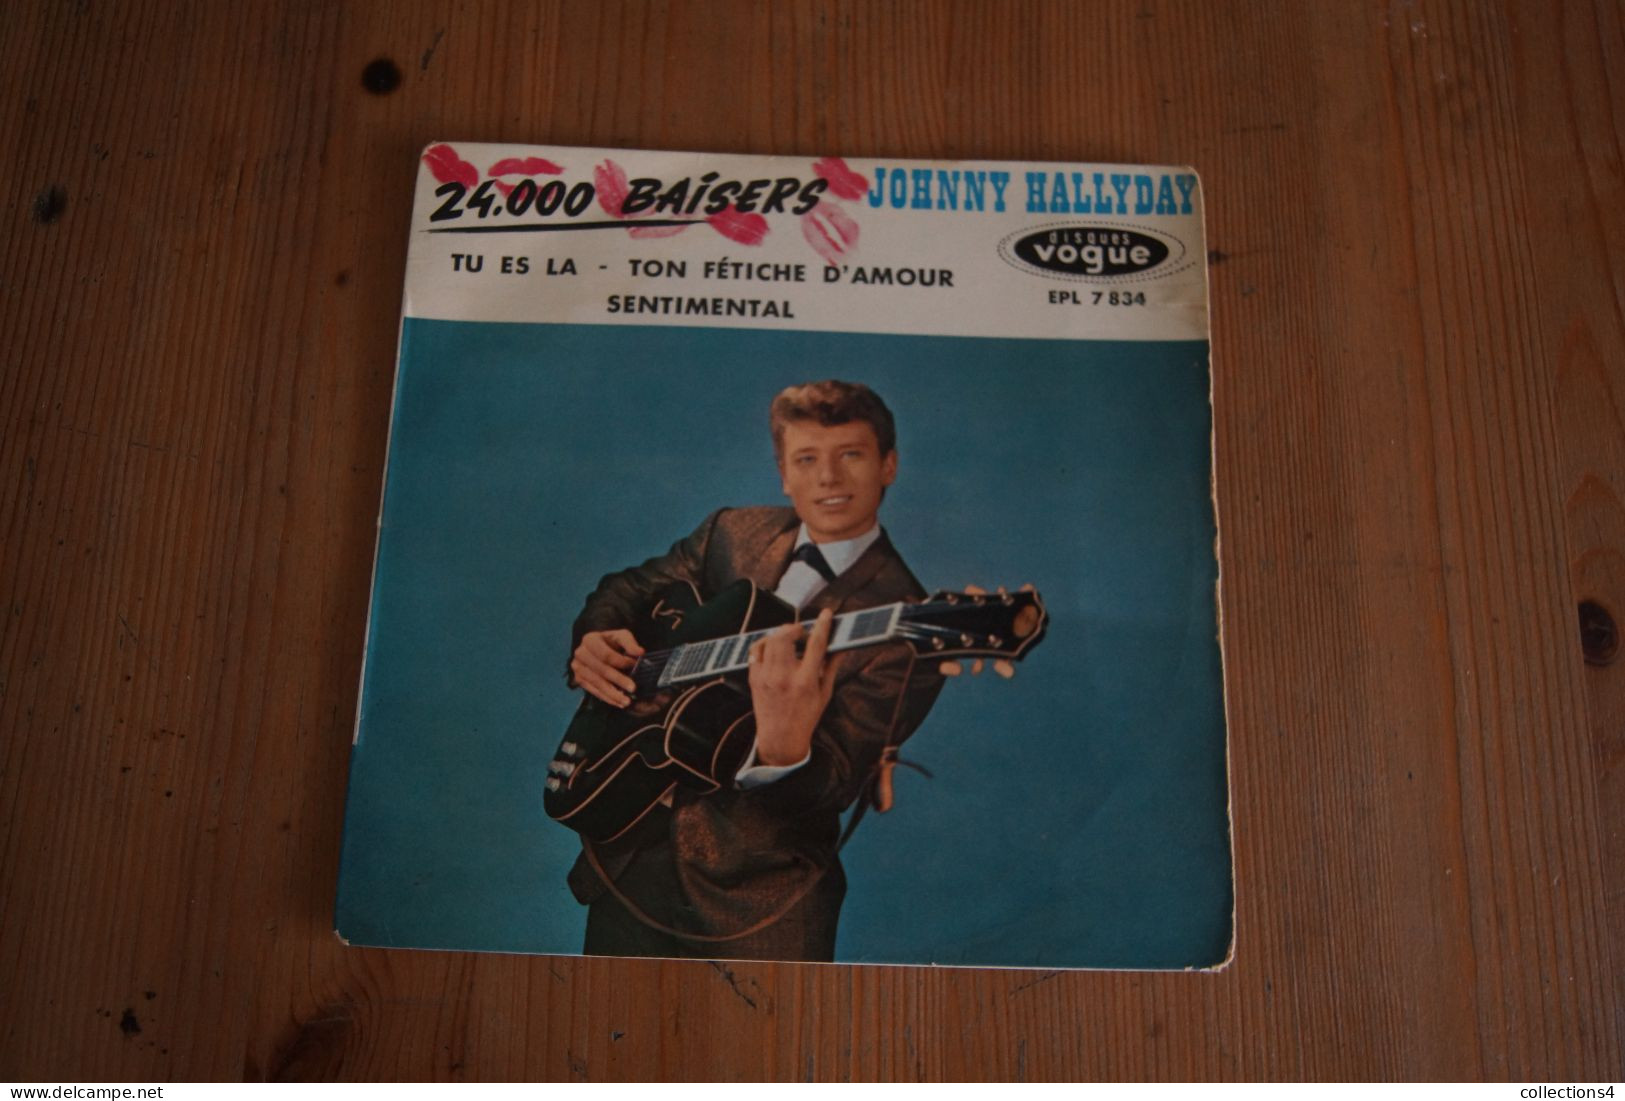 JOHNNY HALLYDAY 24 000 BAISERS  EP   1961 LANGUETTE VALEUR+ - 45 Toeren - Maxi-Single